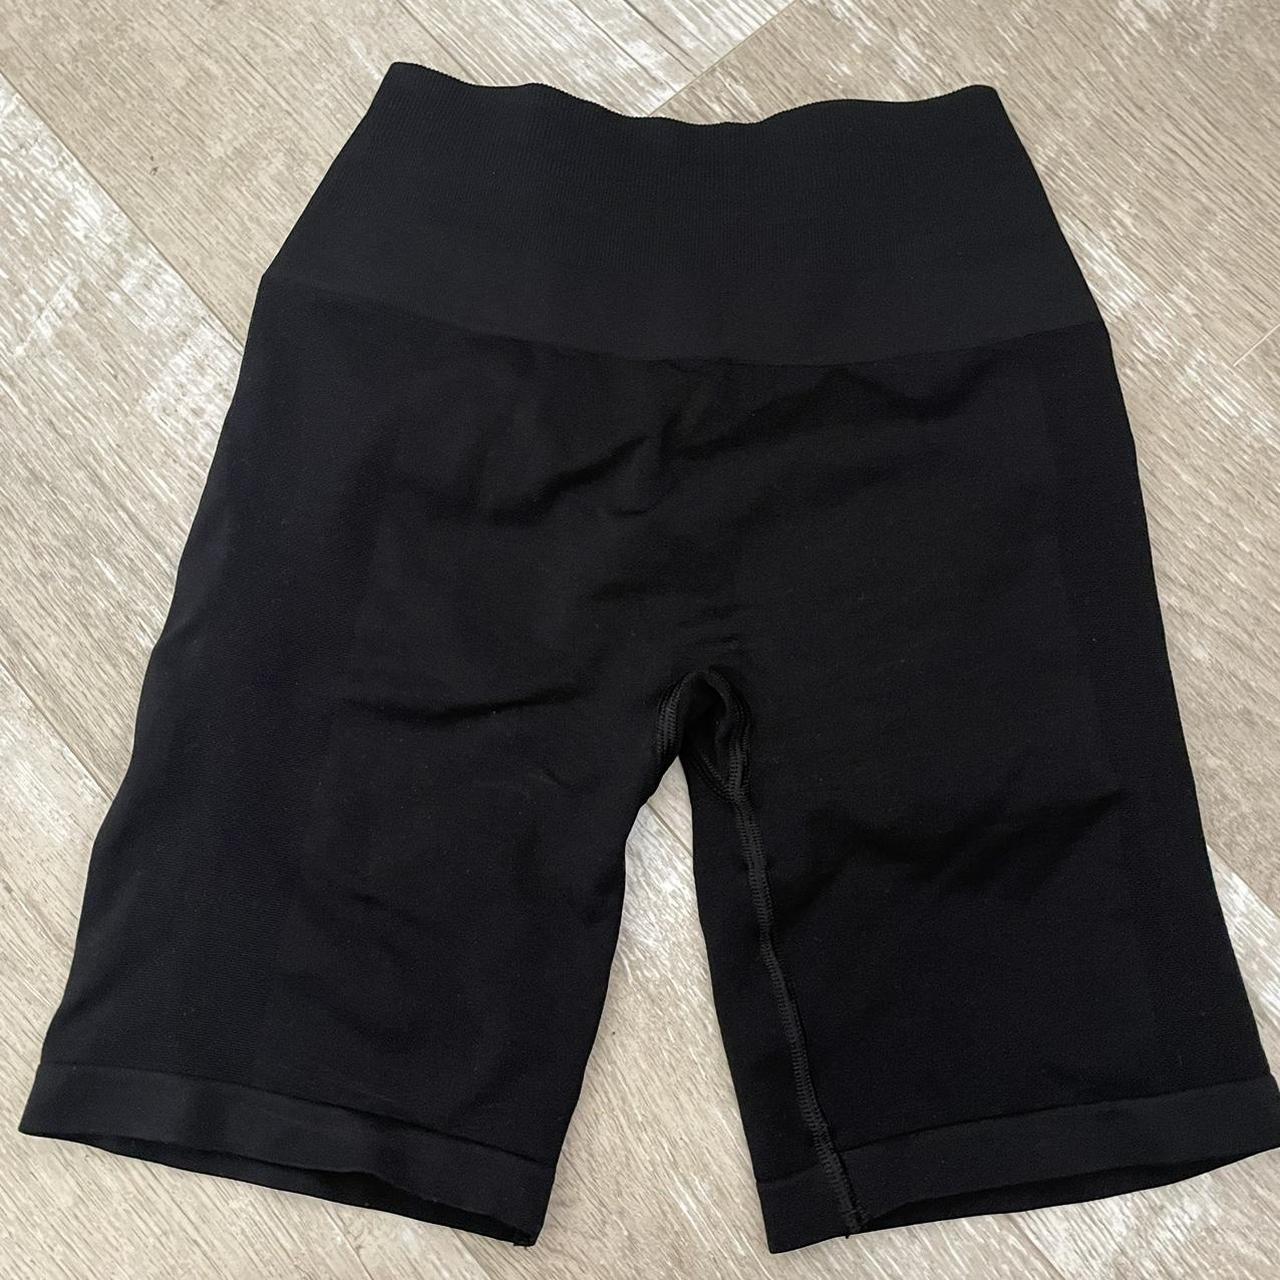 Alphalete Biker Shorts - literally only wore these - Depop